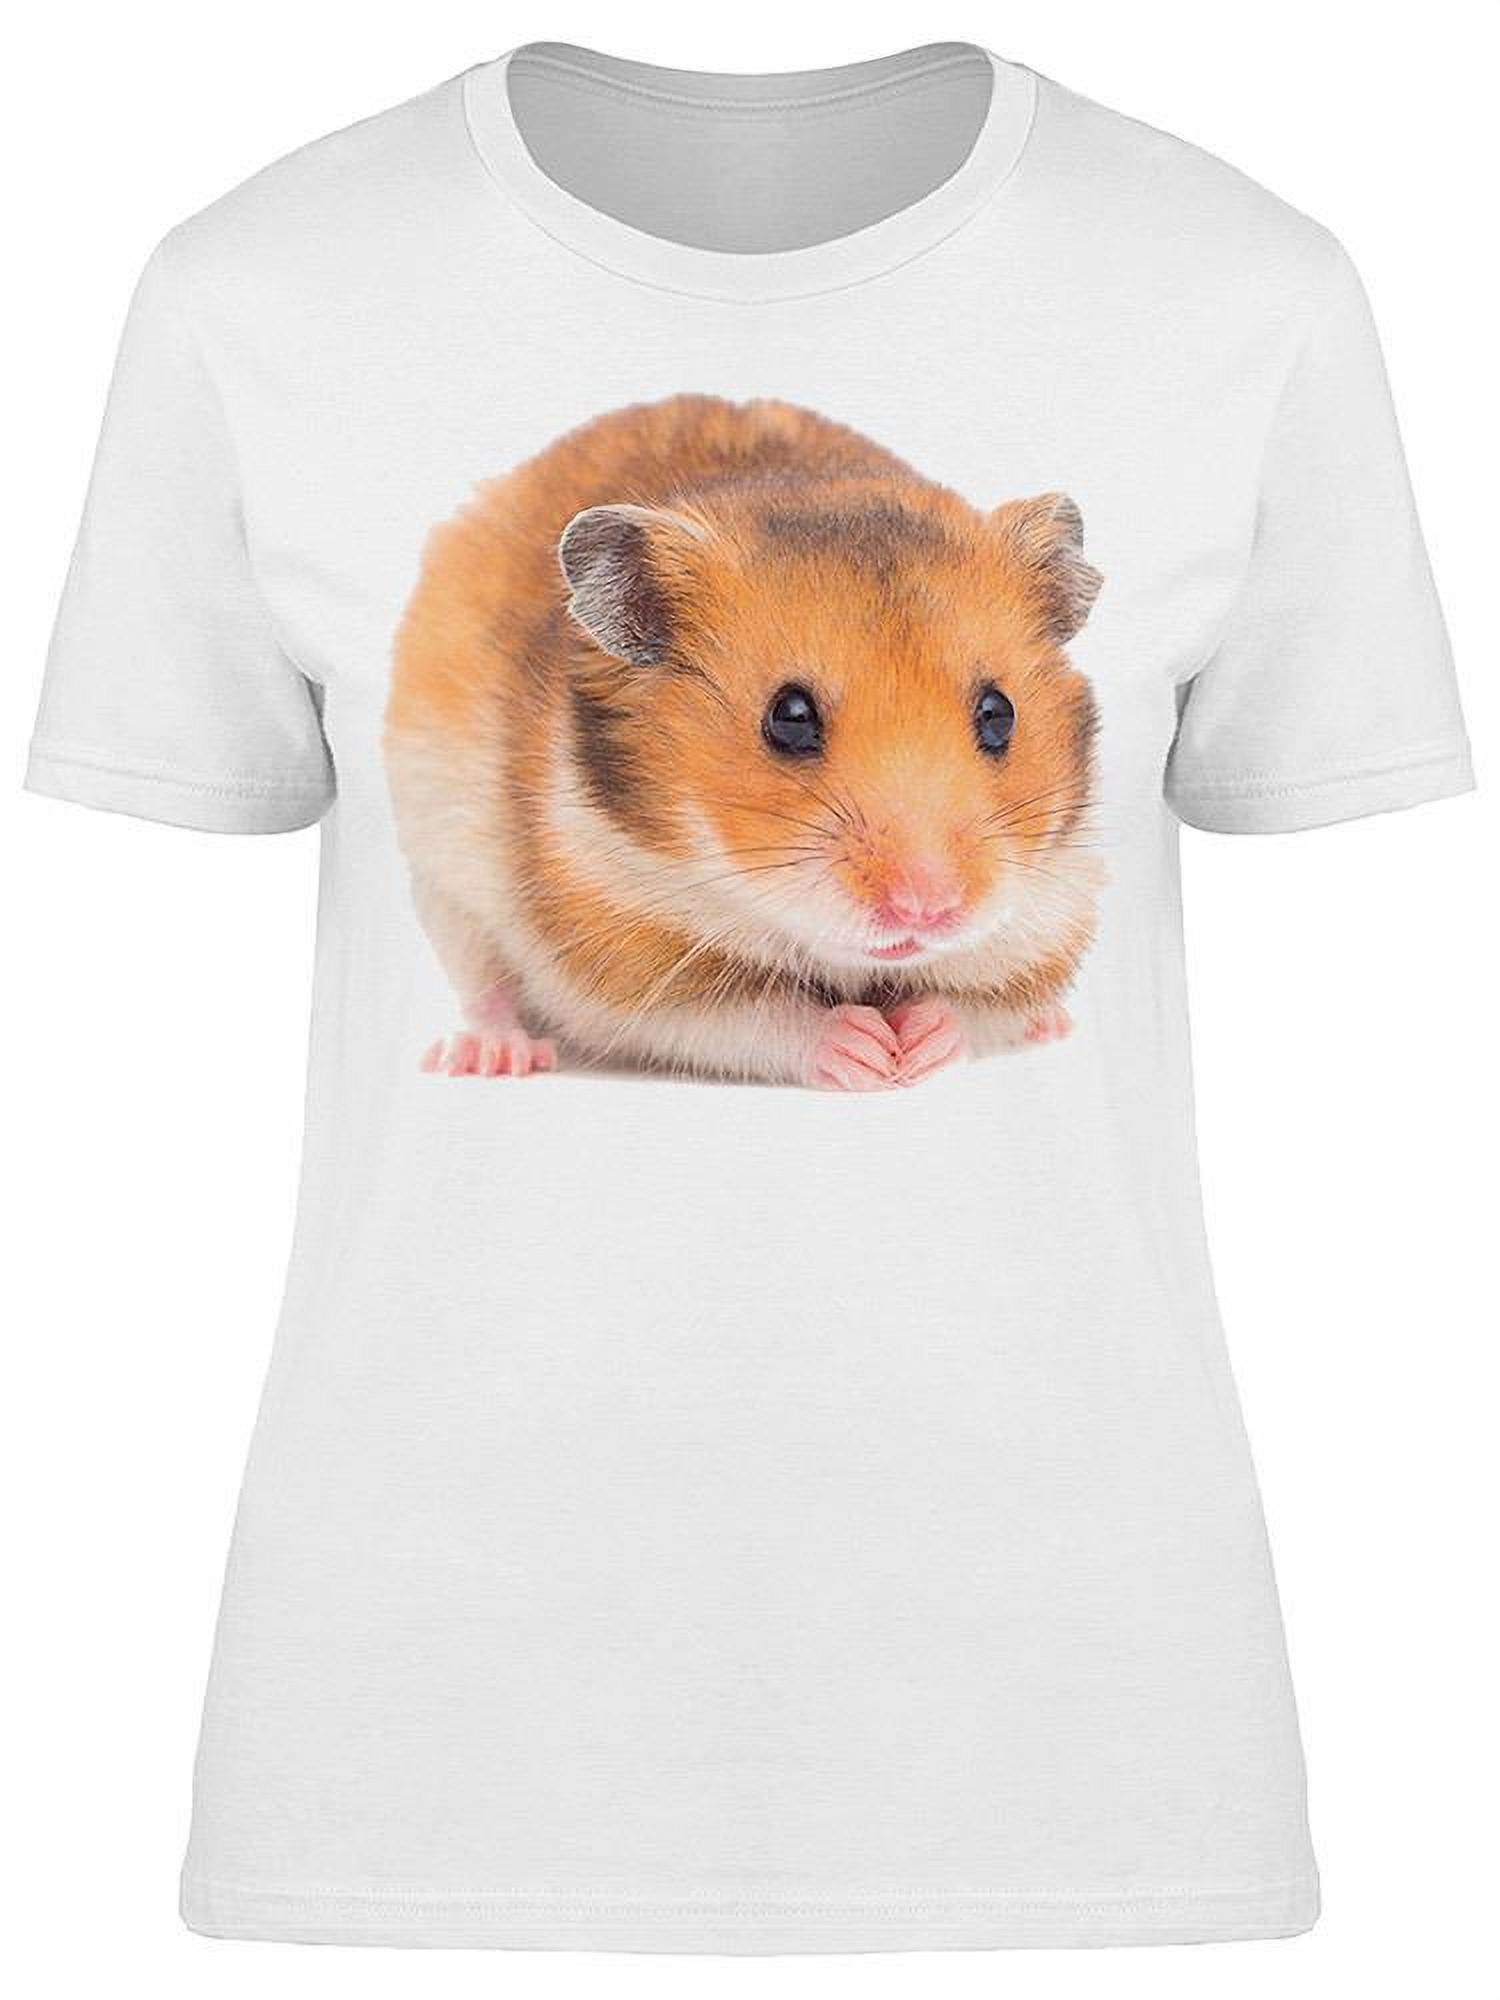 Футболка хомяк. Свитер с хомяком женский. Hamster woman. Hamster in t-Shirt picture. Т хомяки